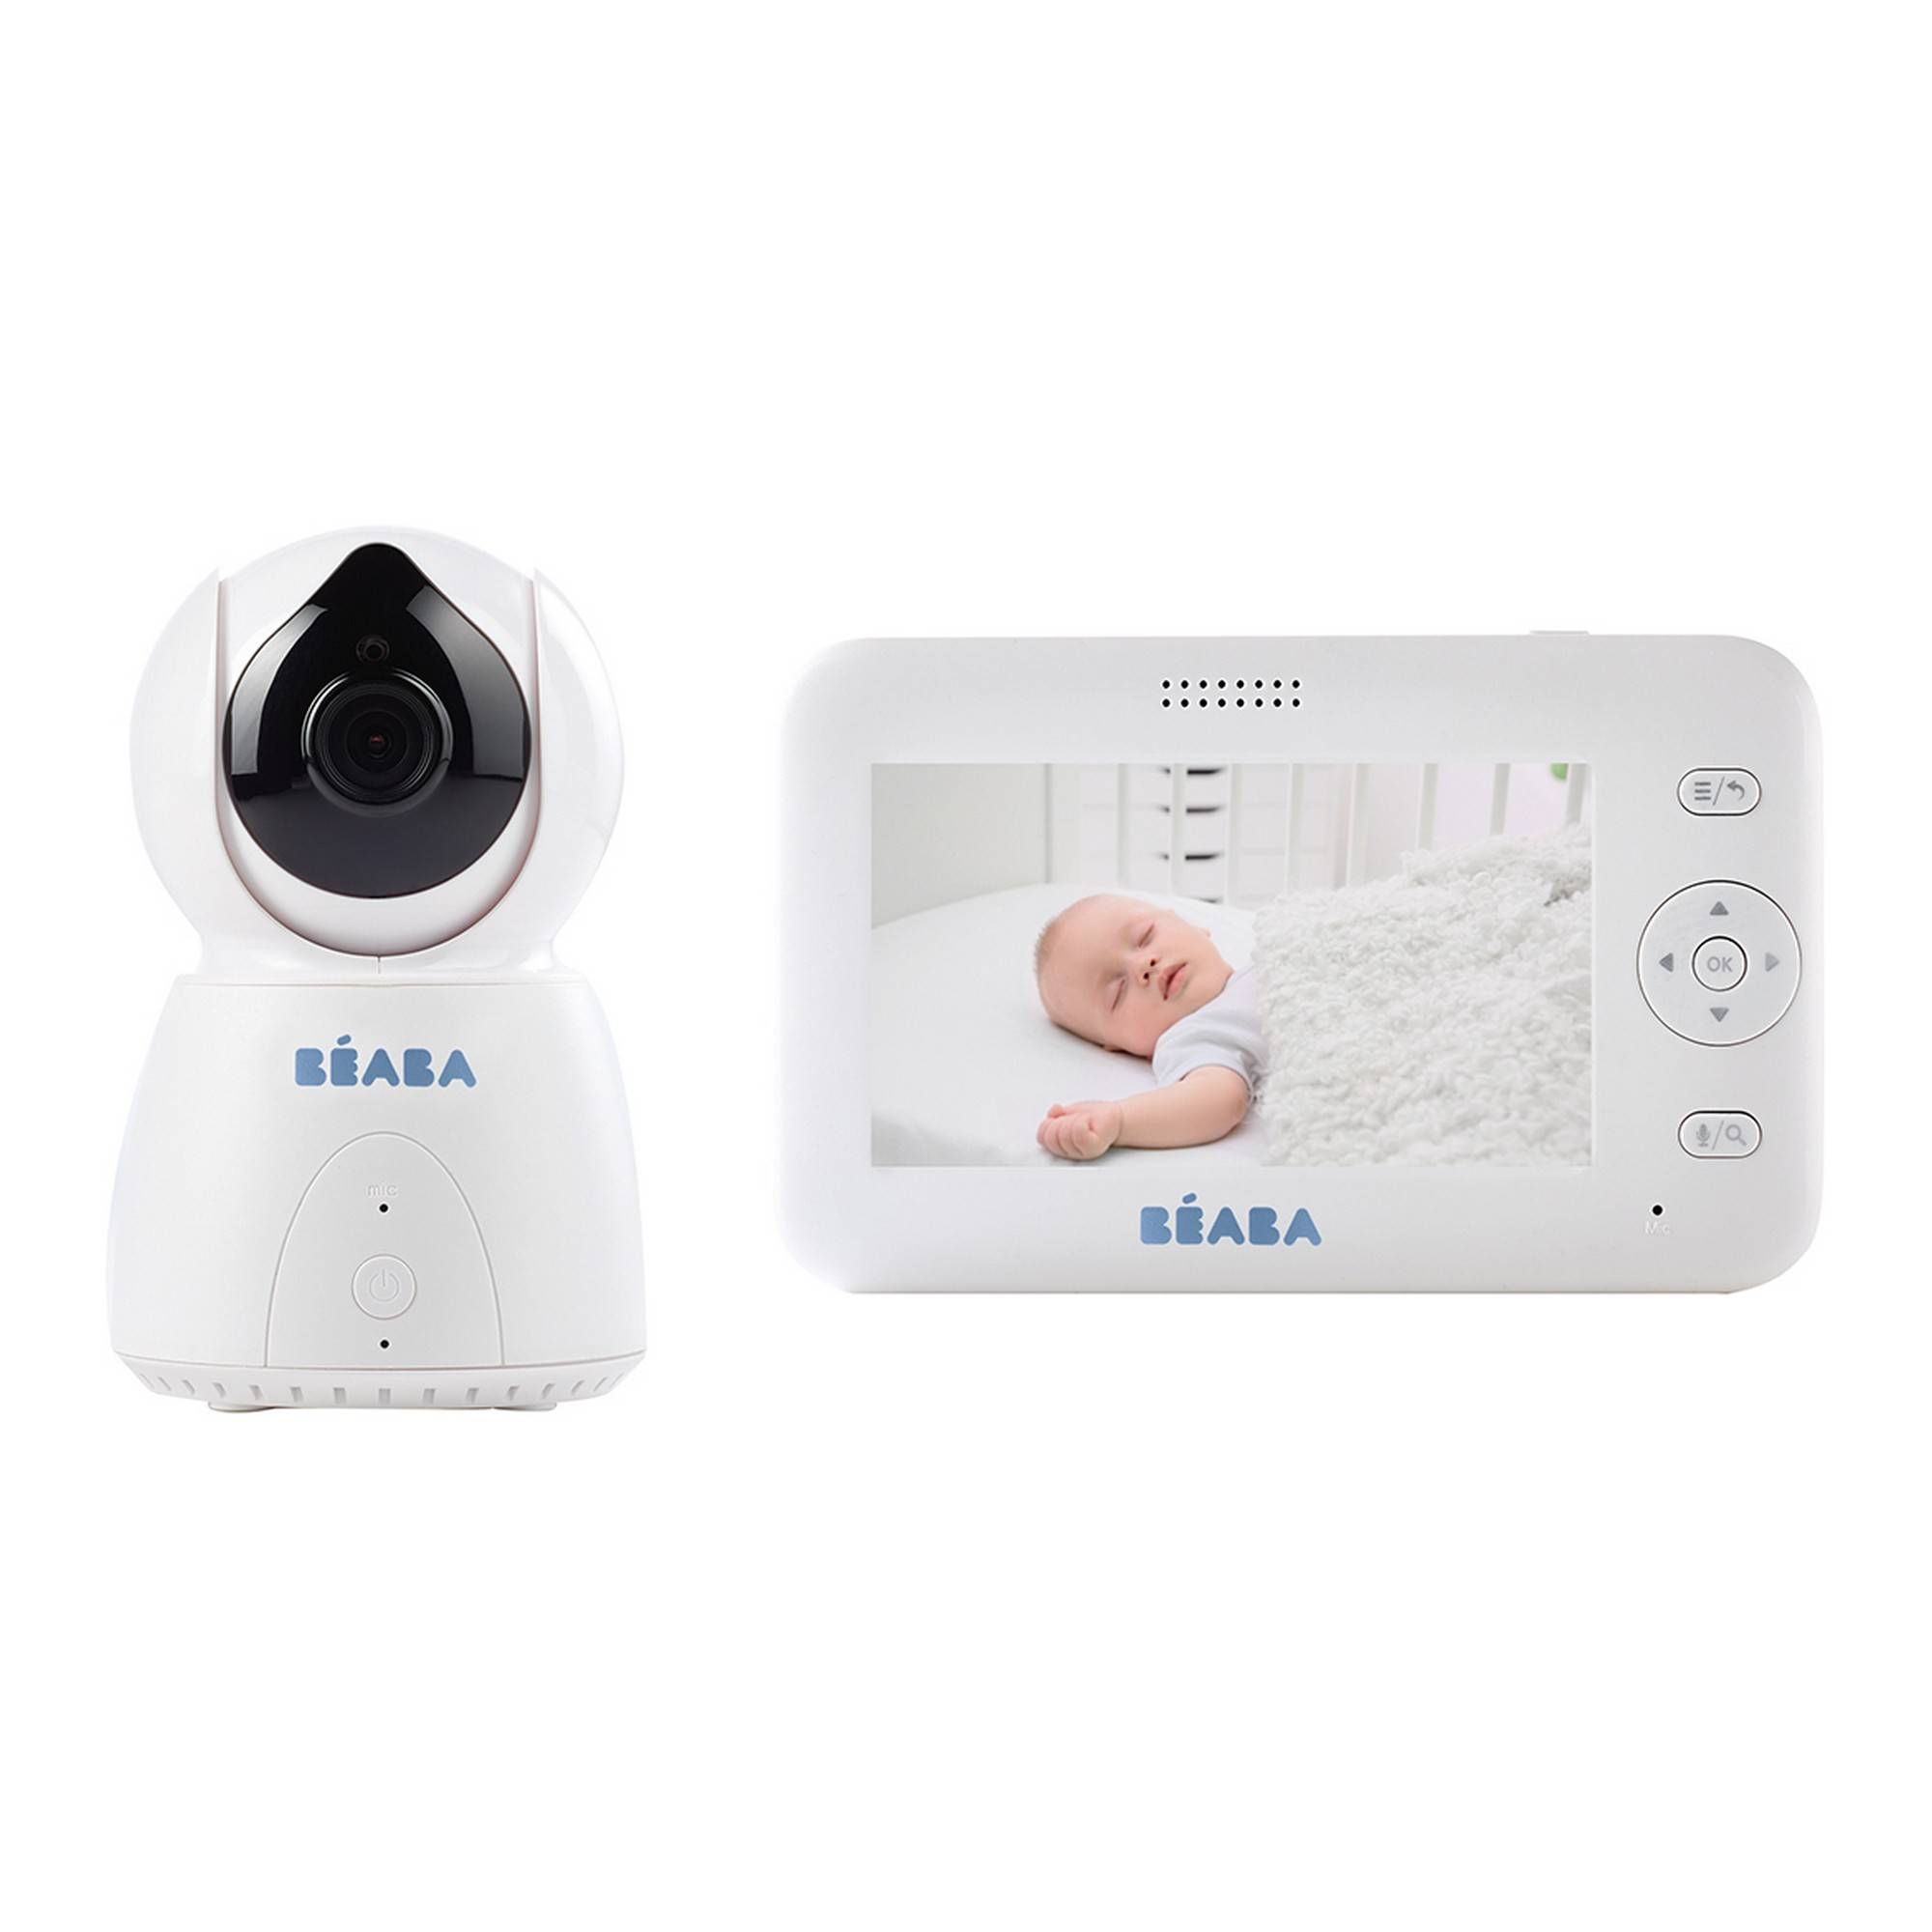 Mère Baby Shop on Instagram: Beaba baby monitor premium Zen, with